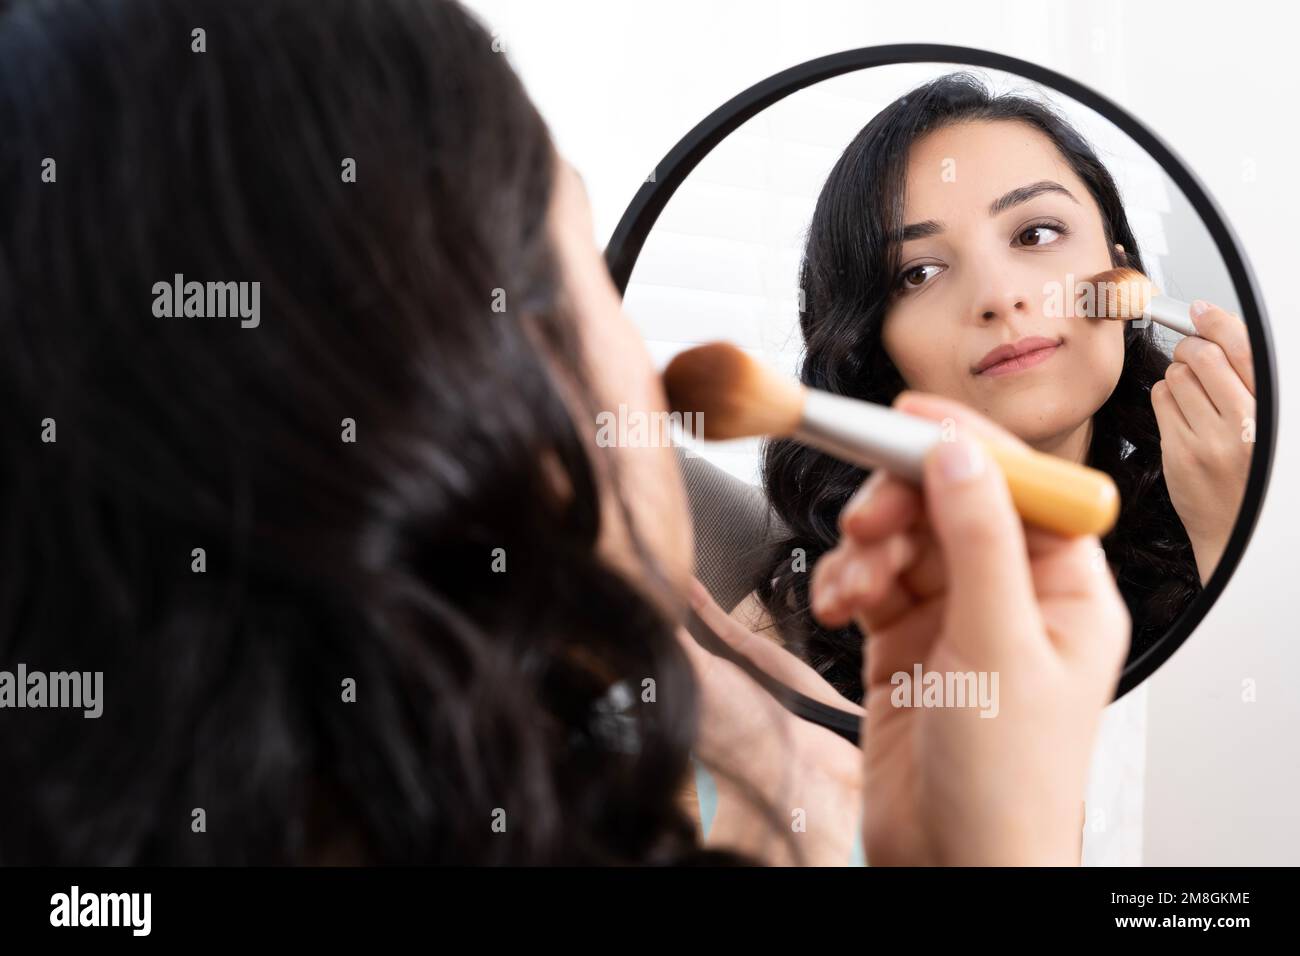 Charming beautiful dark hair woman putting night make up. Holding brush applying blusher or foundation powder. Professional cosmetics concept idea. Stock Photo